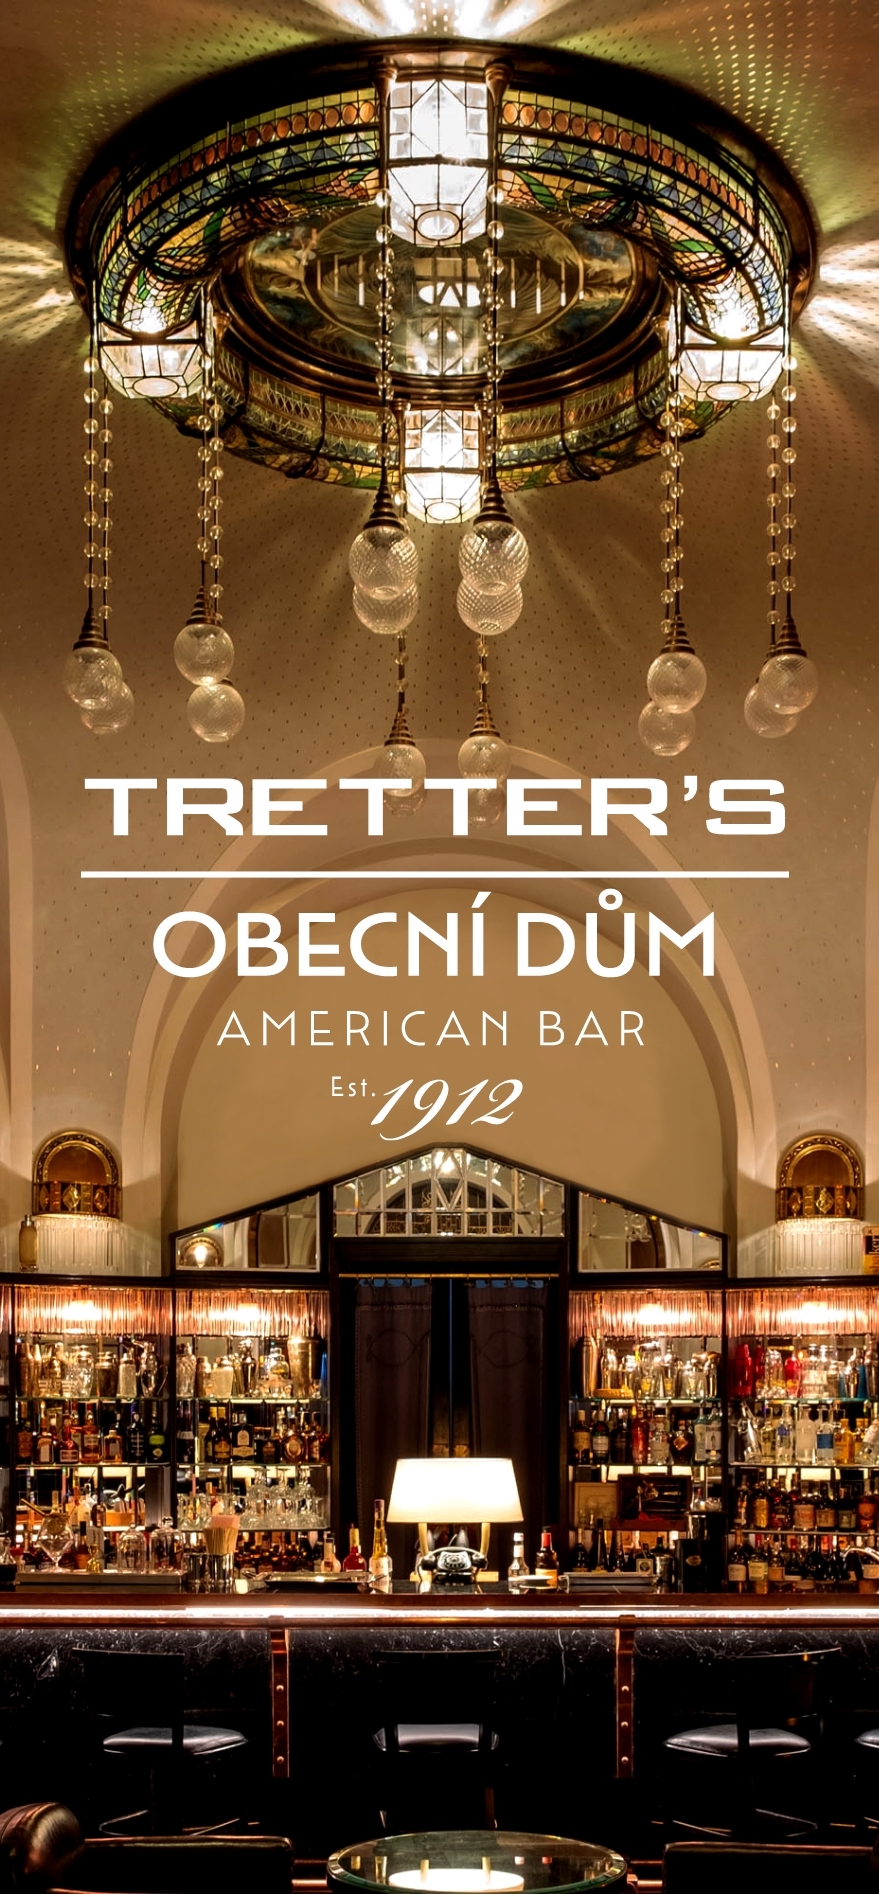 Tretters american bar